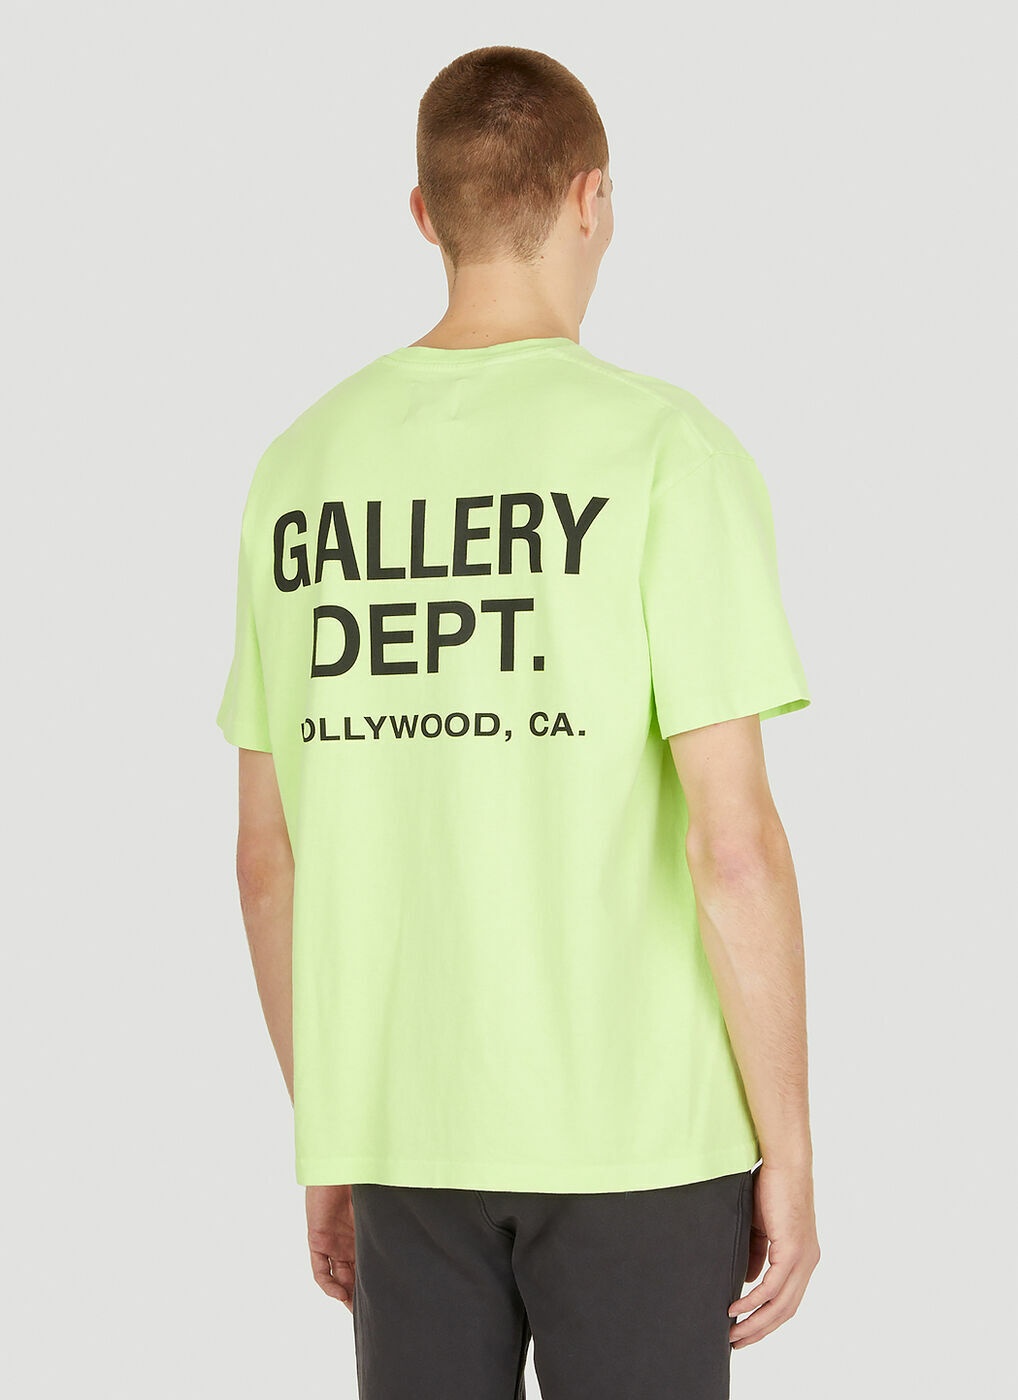 Souvenir T-Shirt in Lime Green Gallery Dept.